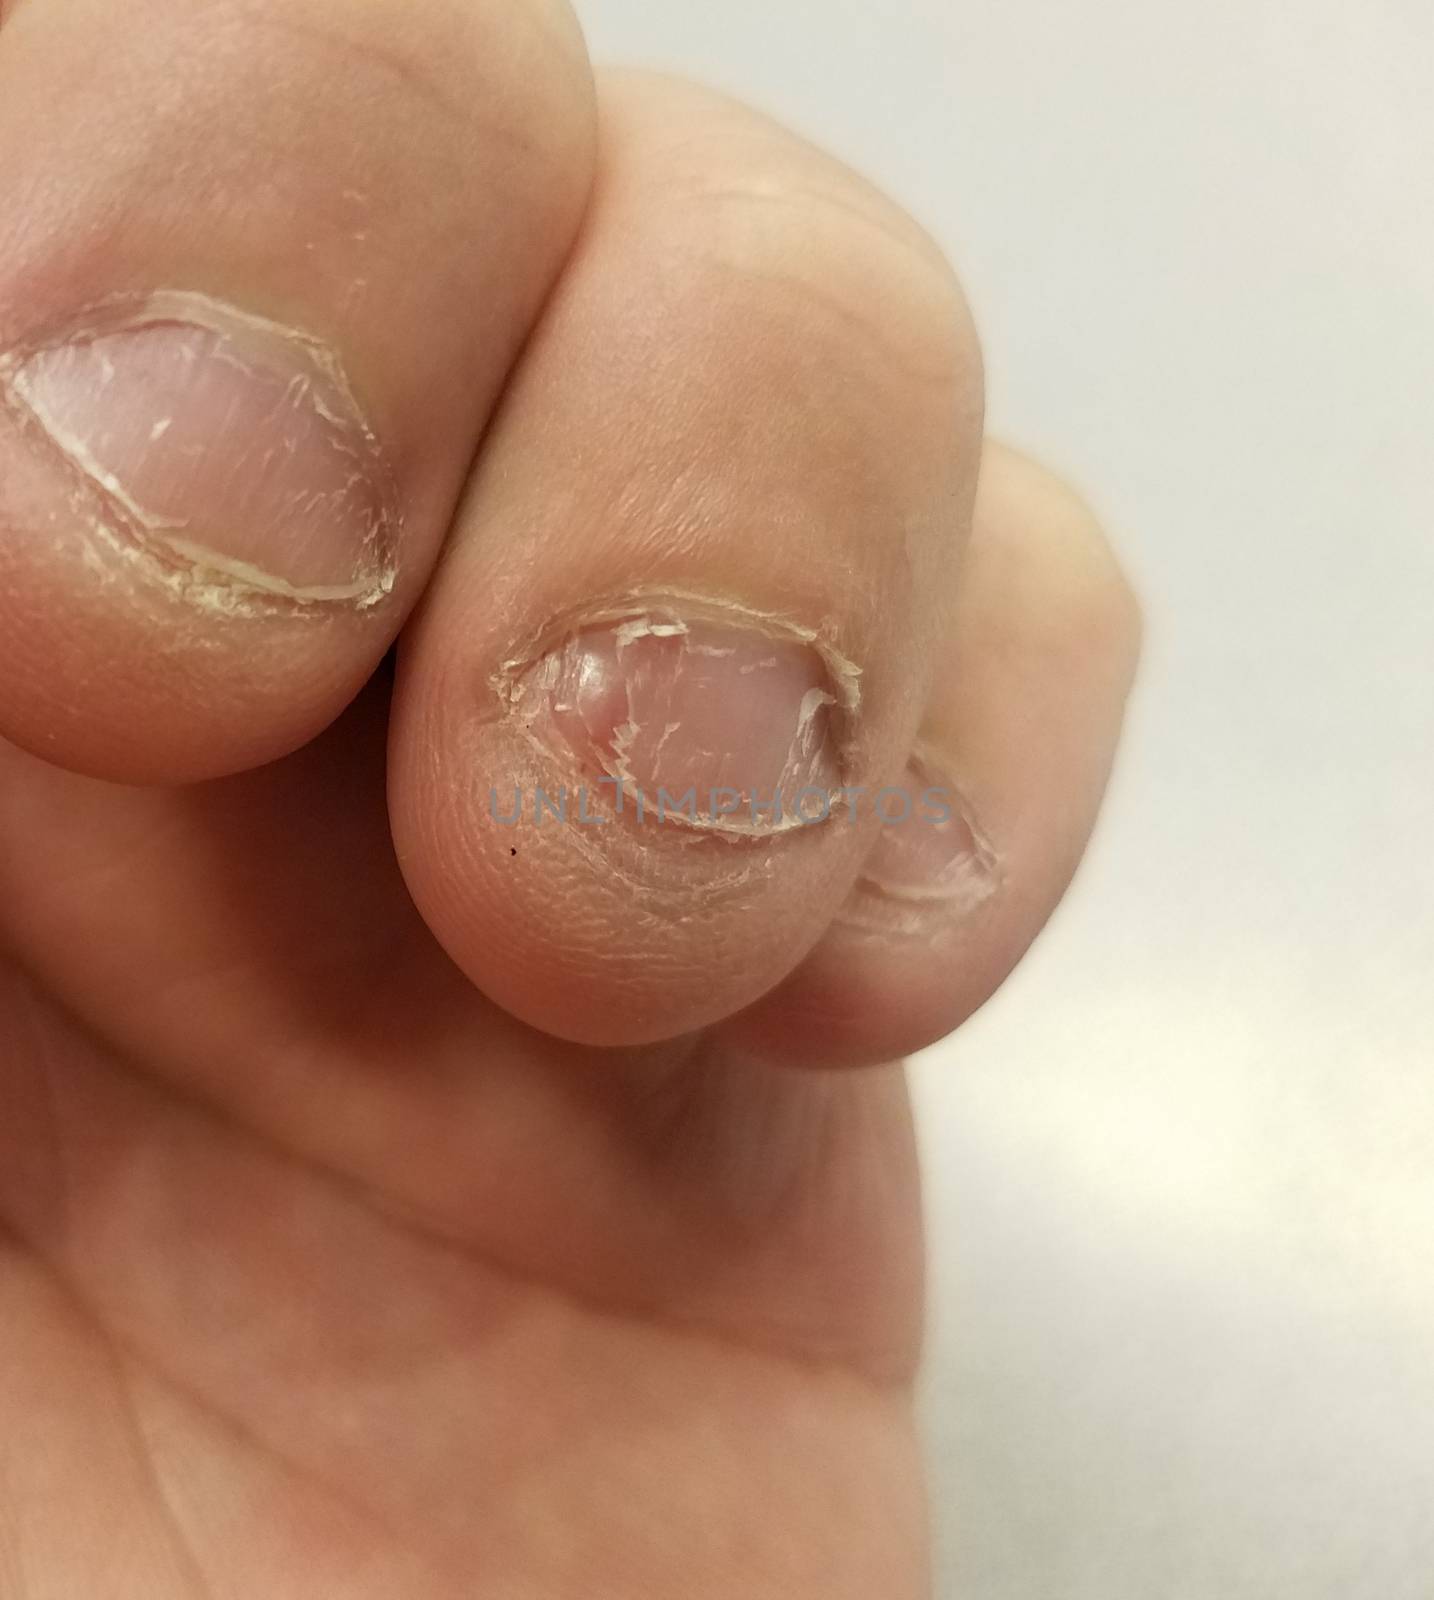 disgusting bitten fingernail and fingers on hand by stockphotofan1